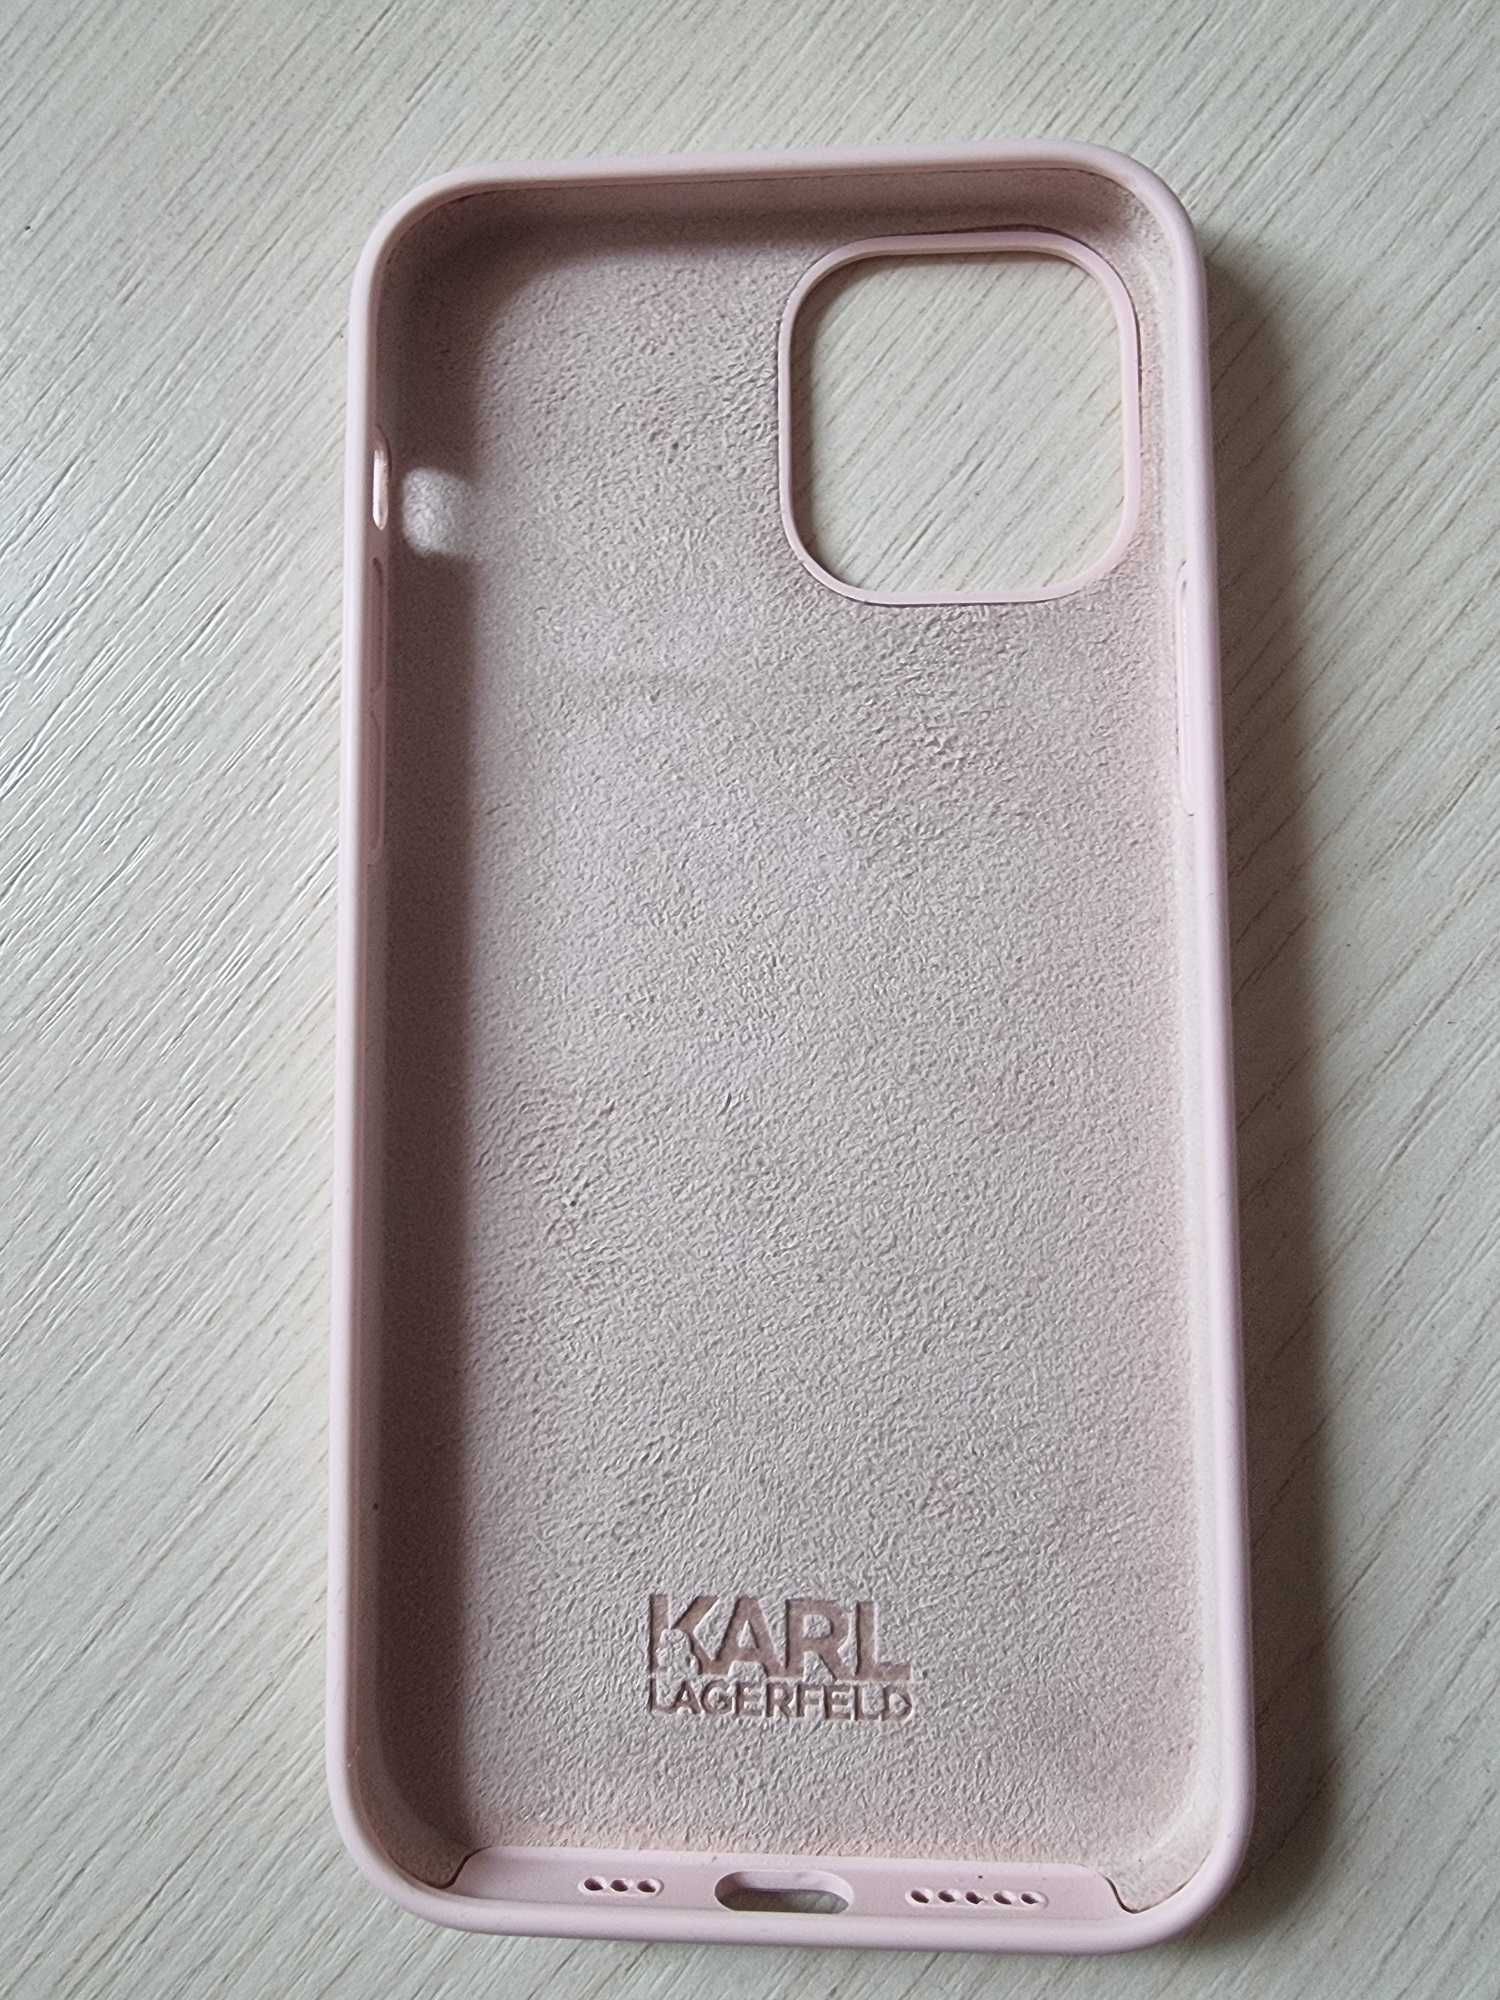 Vand husa silicon Karl Lagerfeld Iphone 12 Pro